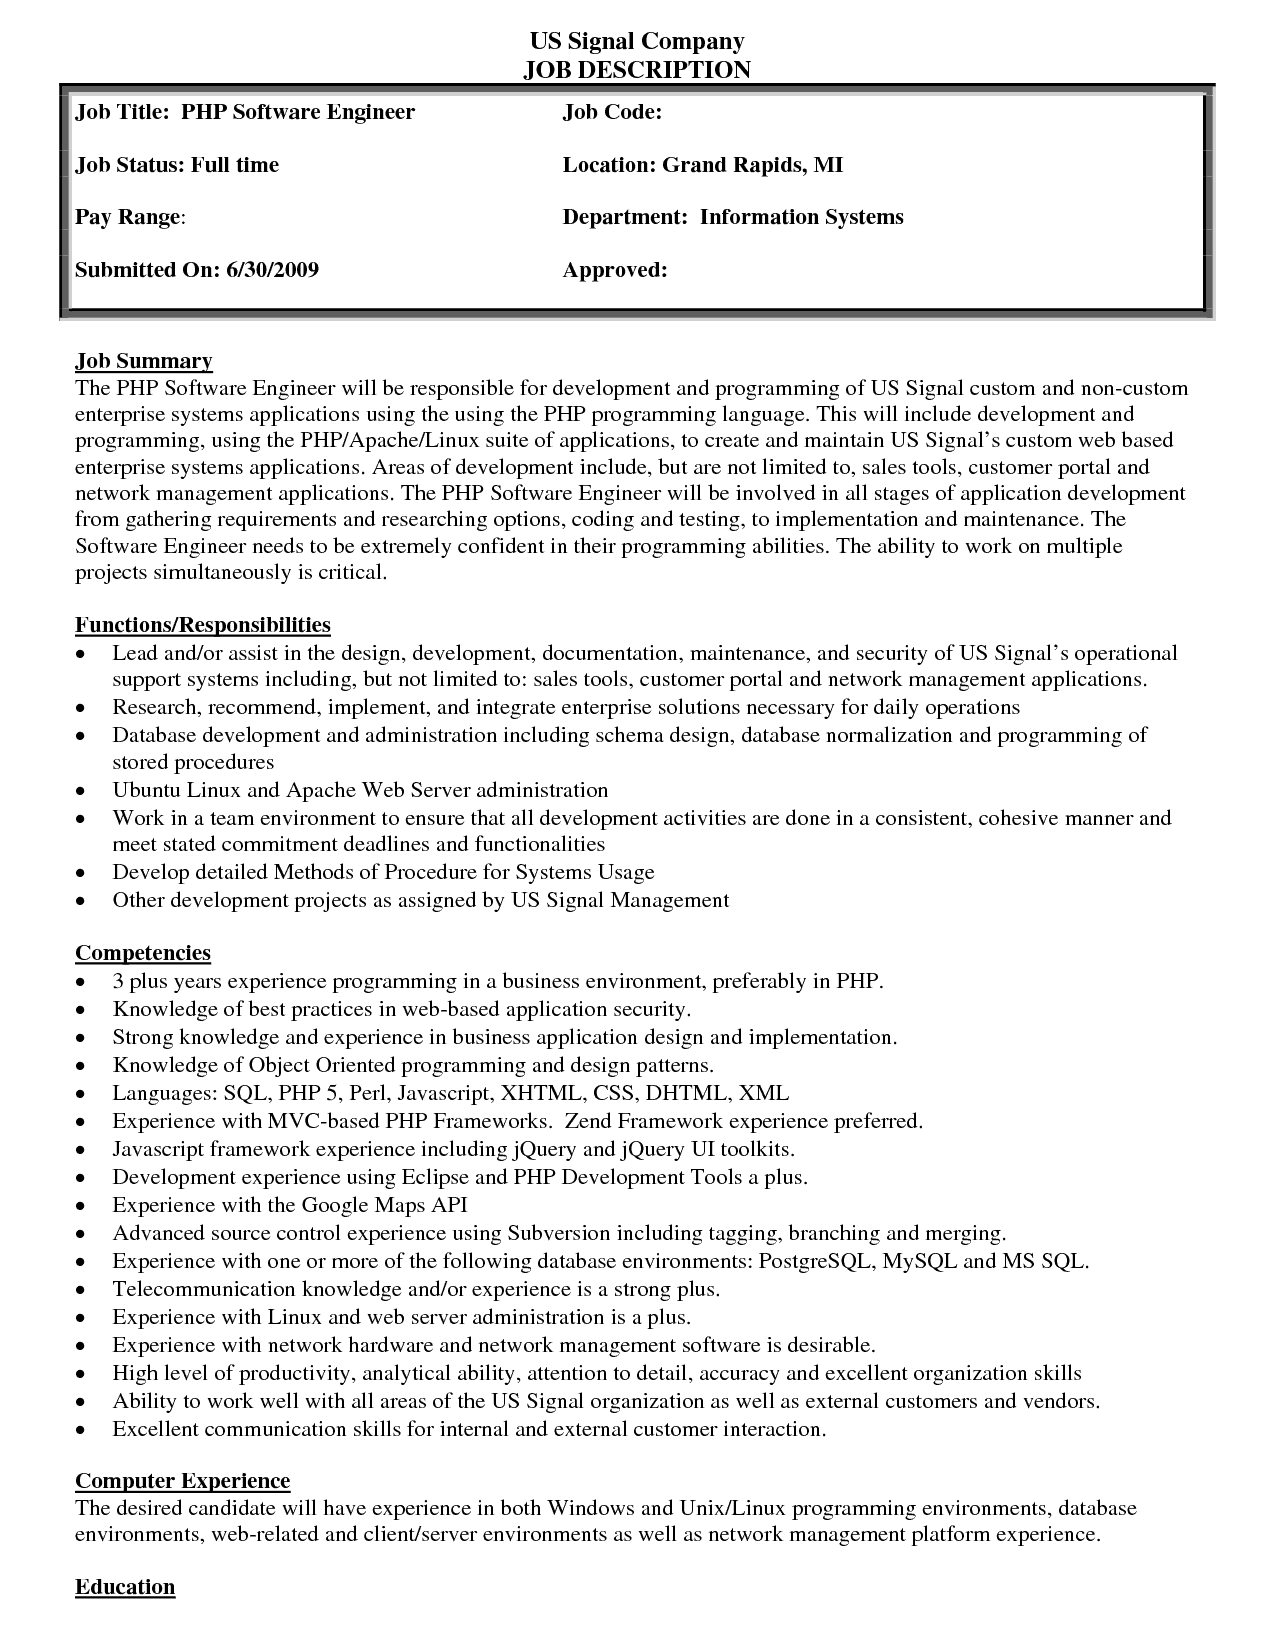 Writing a job position description